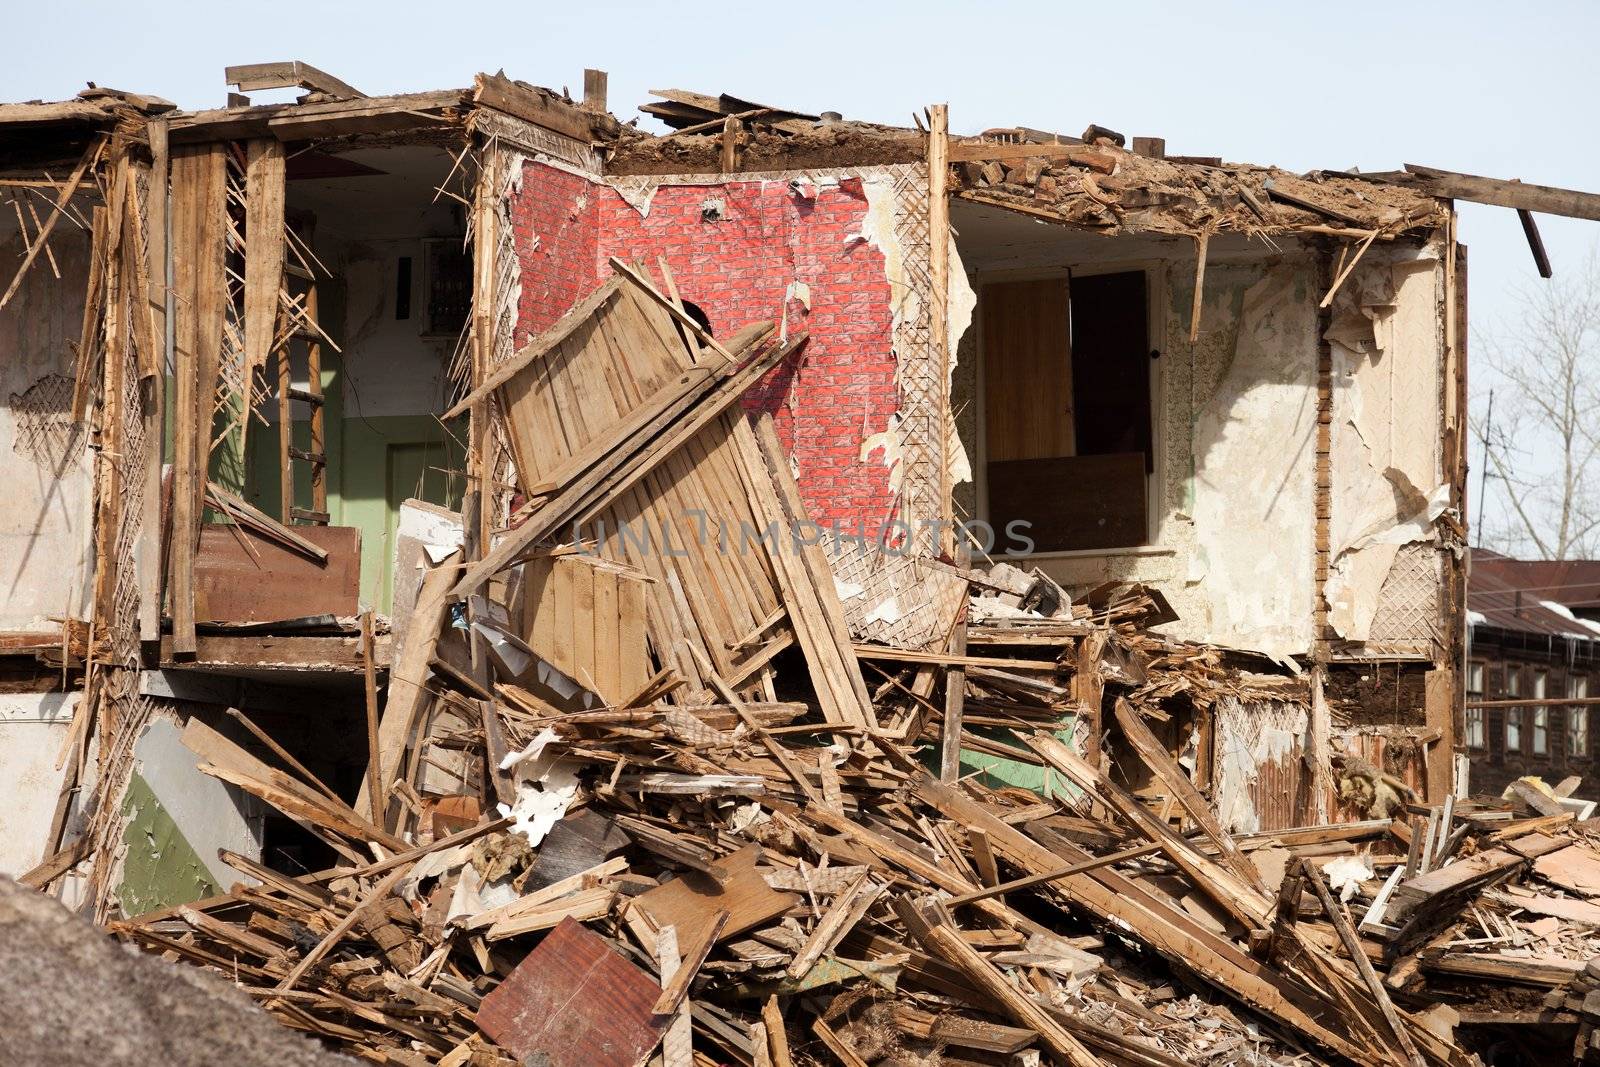 Hurricane earthquake disaster damage ruined house